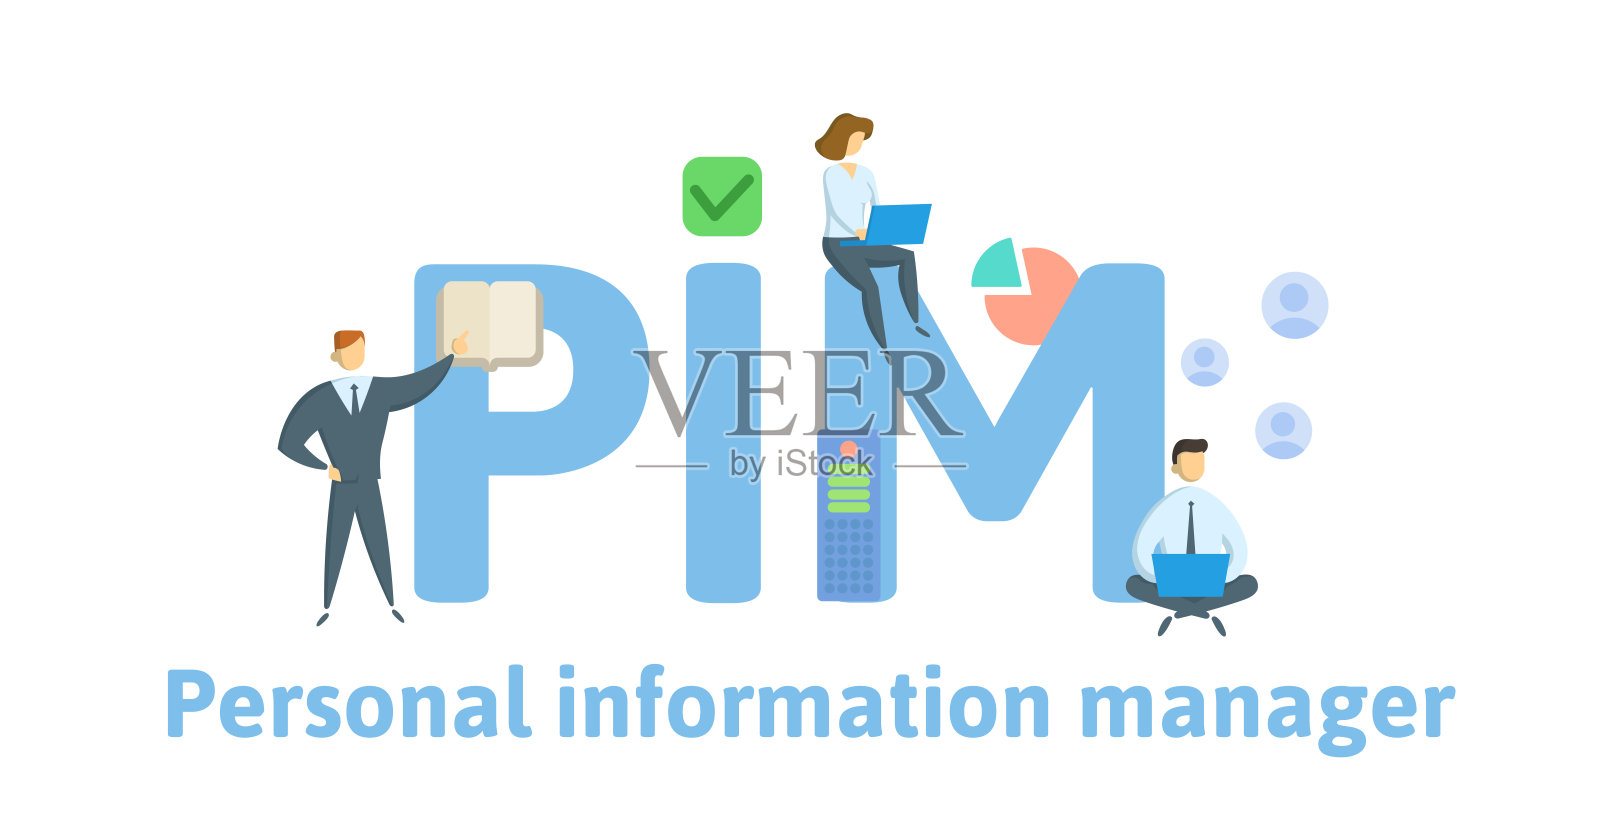 PIM，个人信息经理。概念与关键字，字母和图标。平面矢量图。孤立在白色背景上。插画图片素材